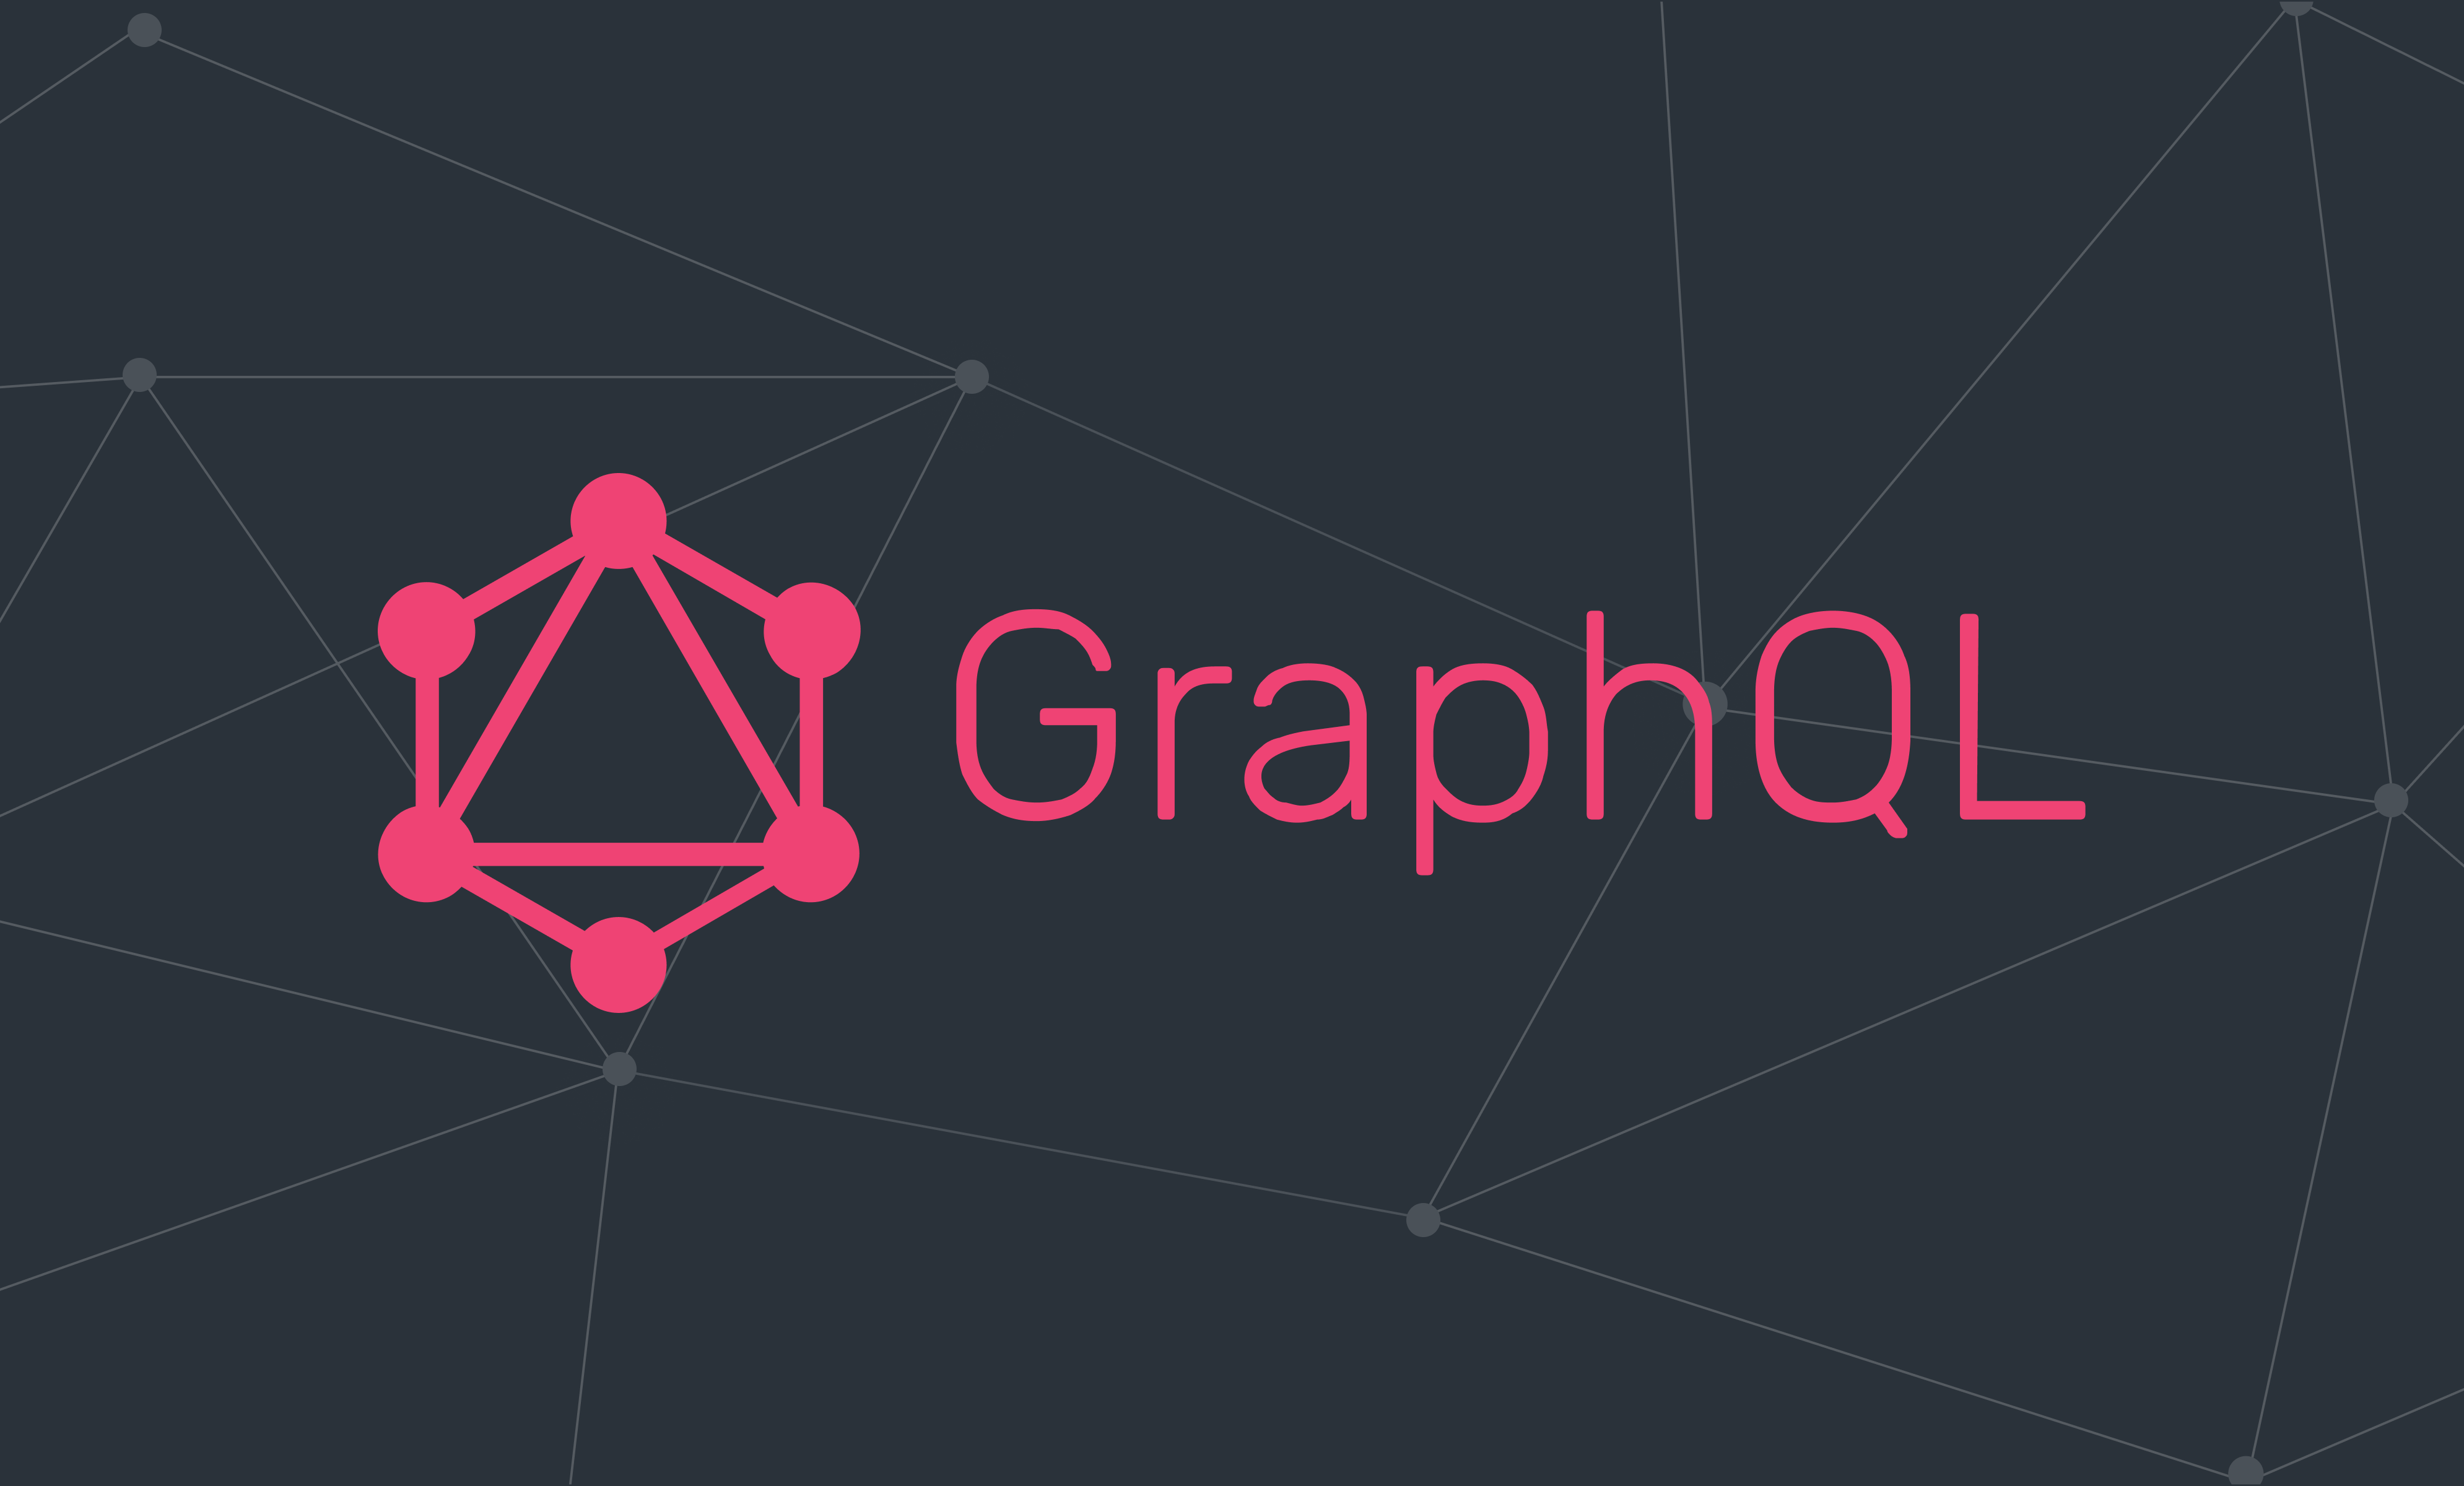 Benefits of using GraphQL over RESTful API